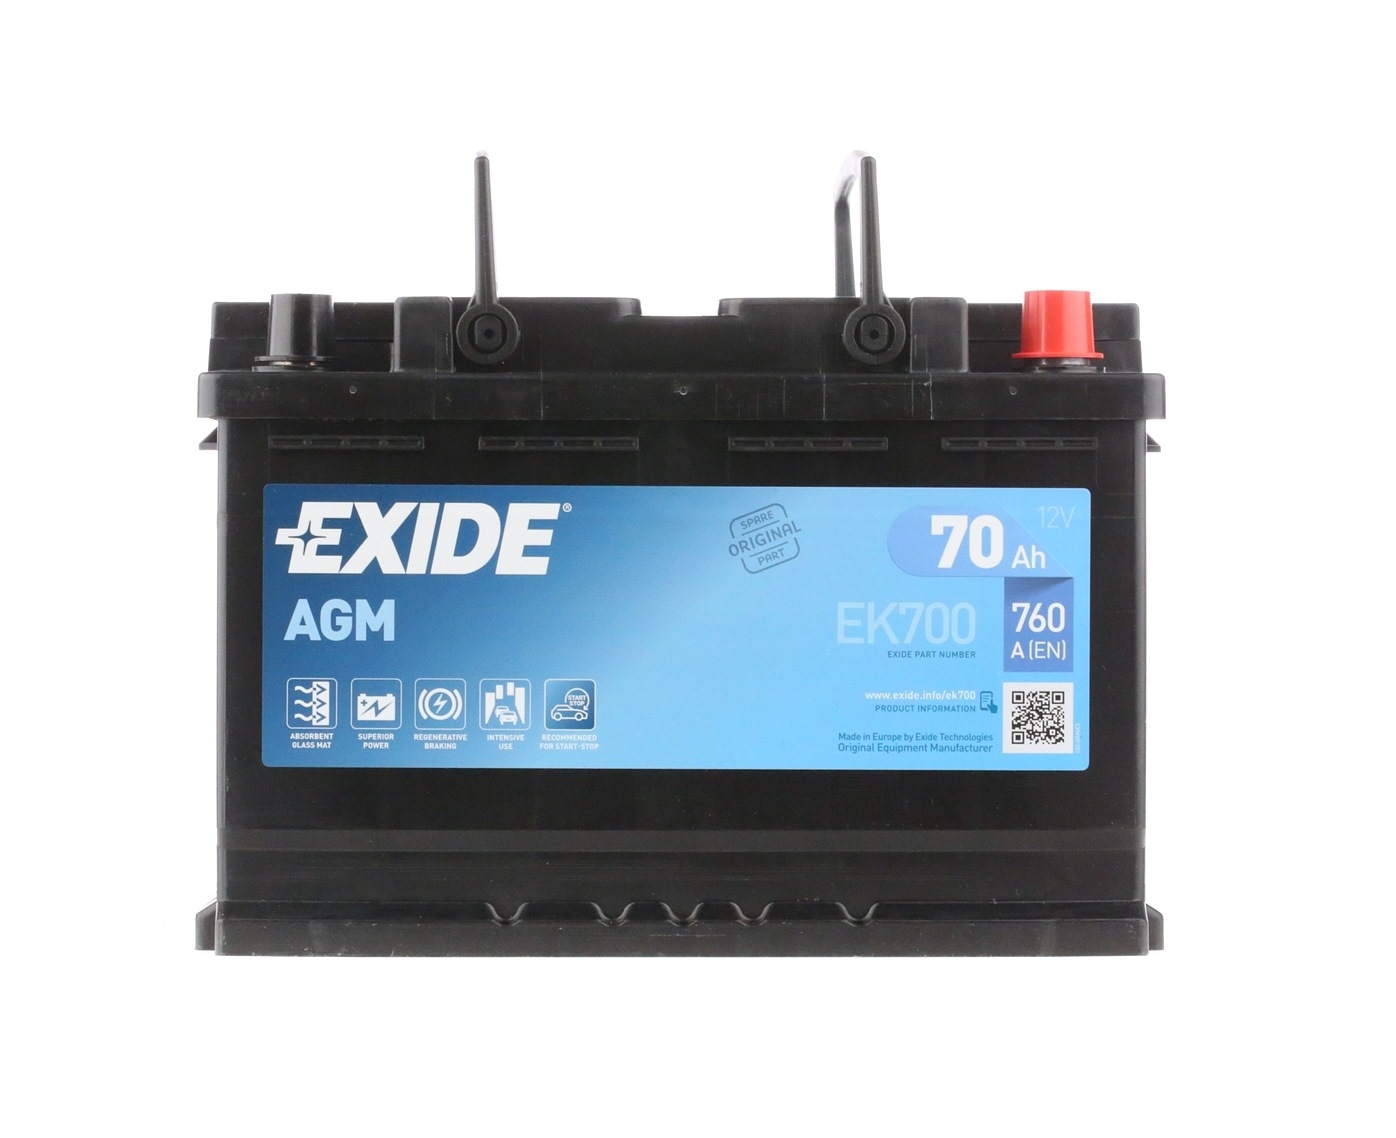 EK700 (067AGM) EXIDE EK700 MERCEDES-BENZ Autobatterie 12V 70Ah 760A B13 AGM-Batterie